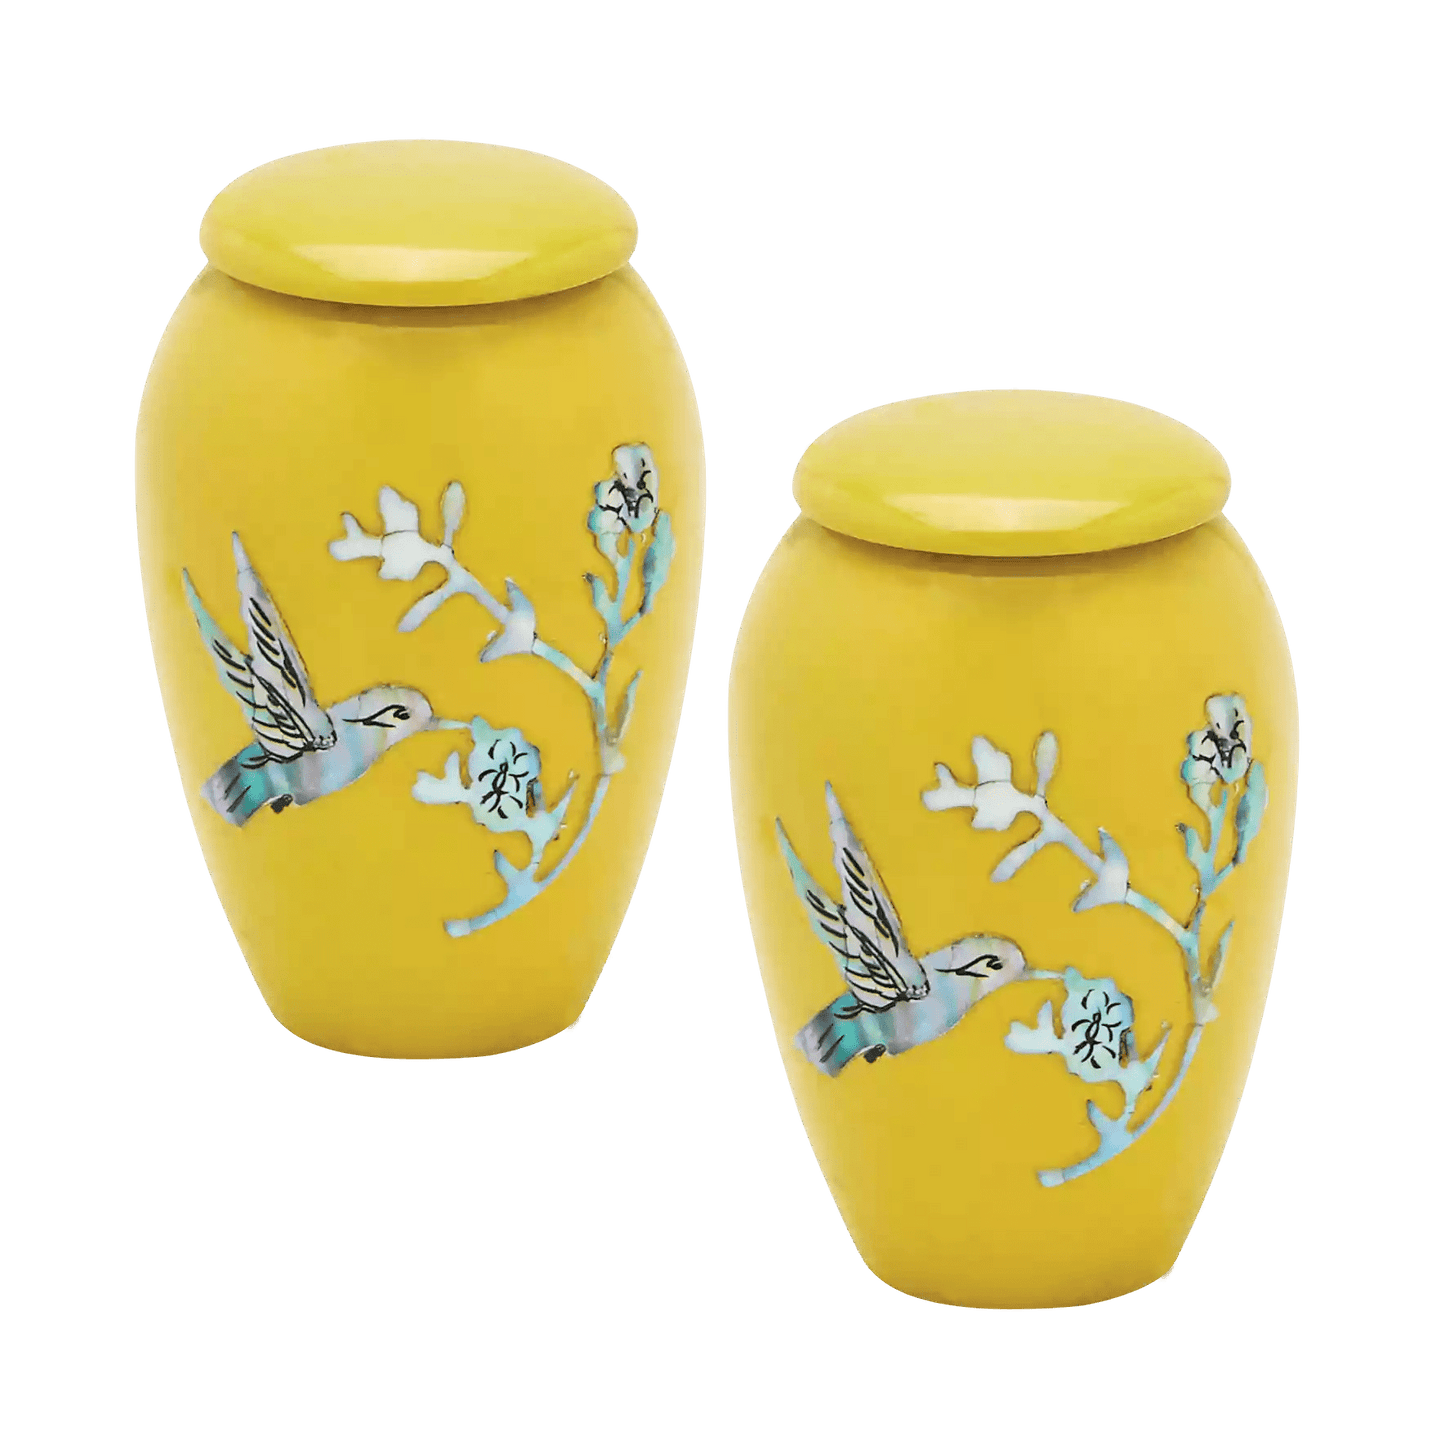 Pair of Keepsake Urns - Yellow Hummingbird | Designer Keepsake Urns